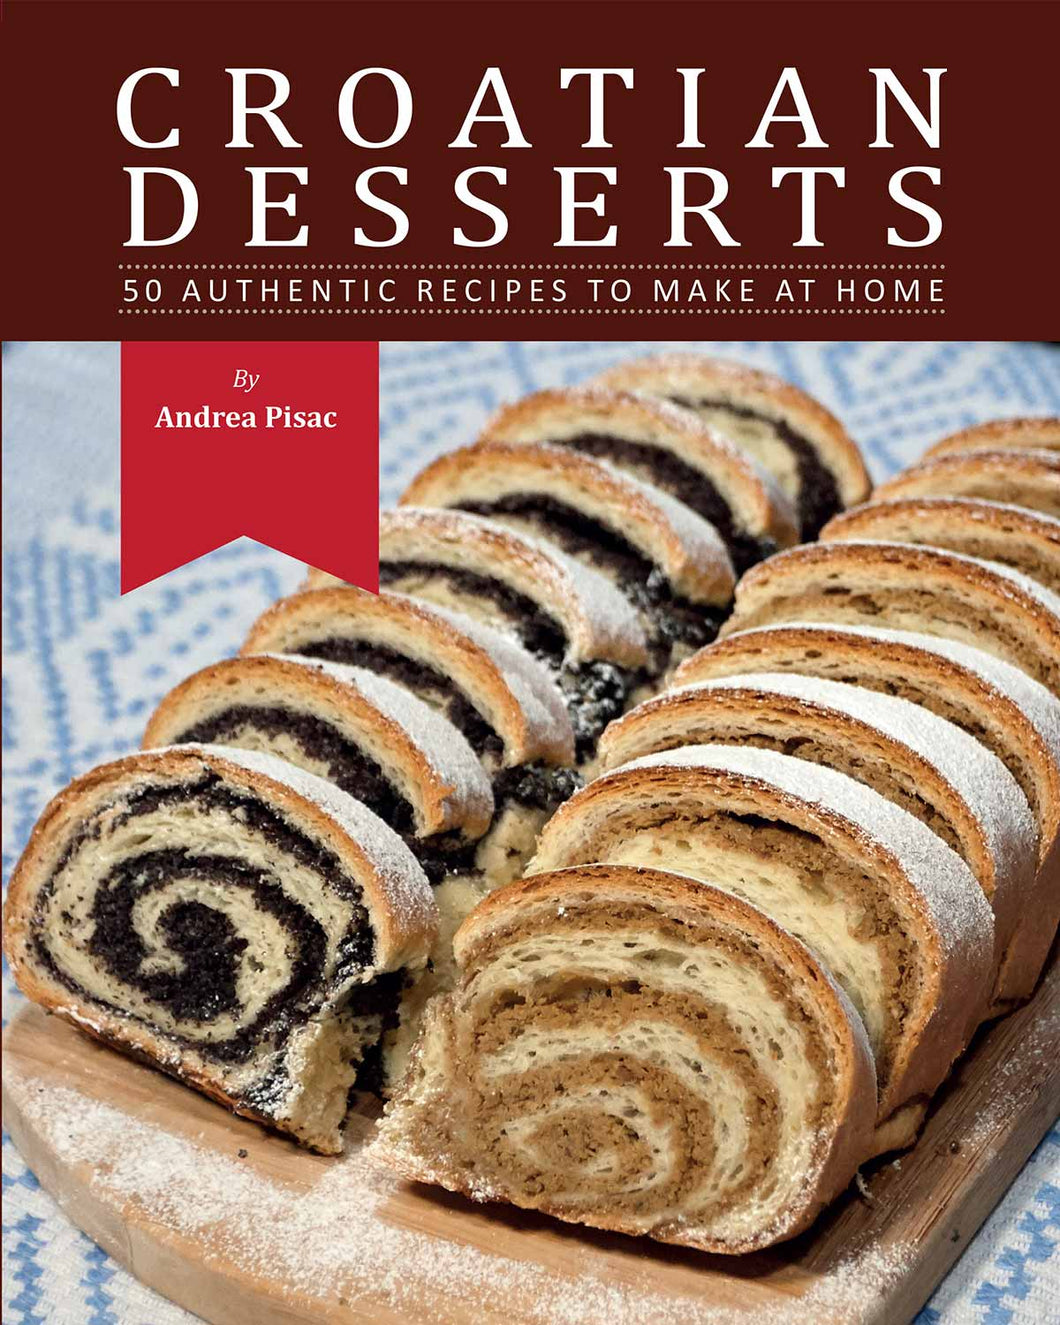 Croatian Desserts cookbook